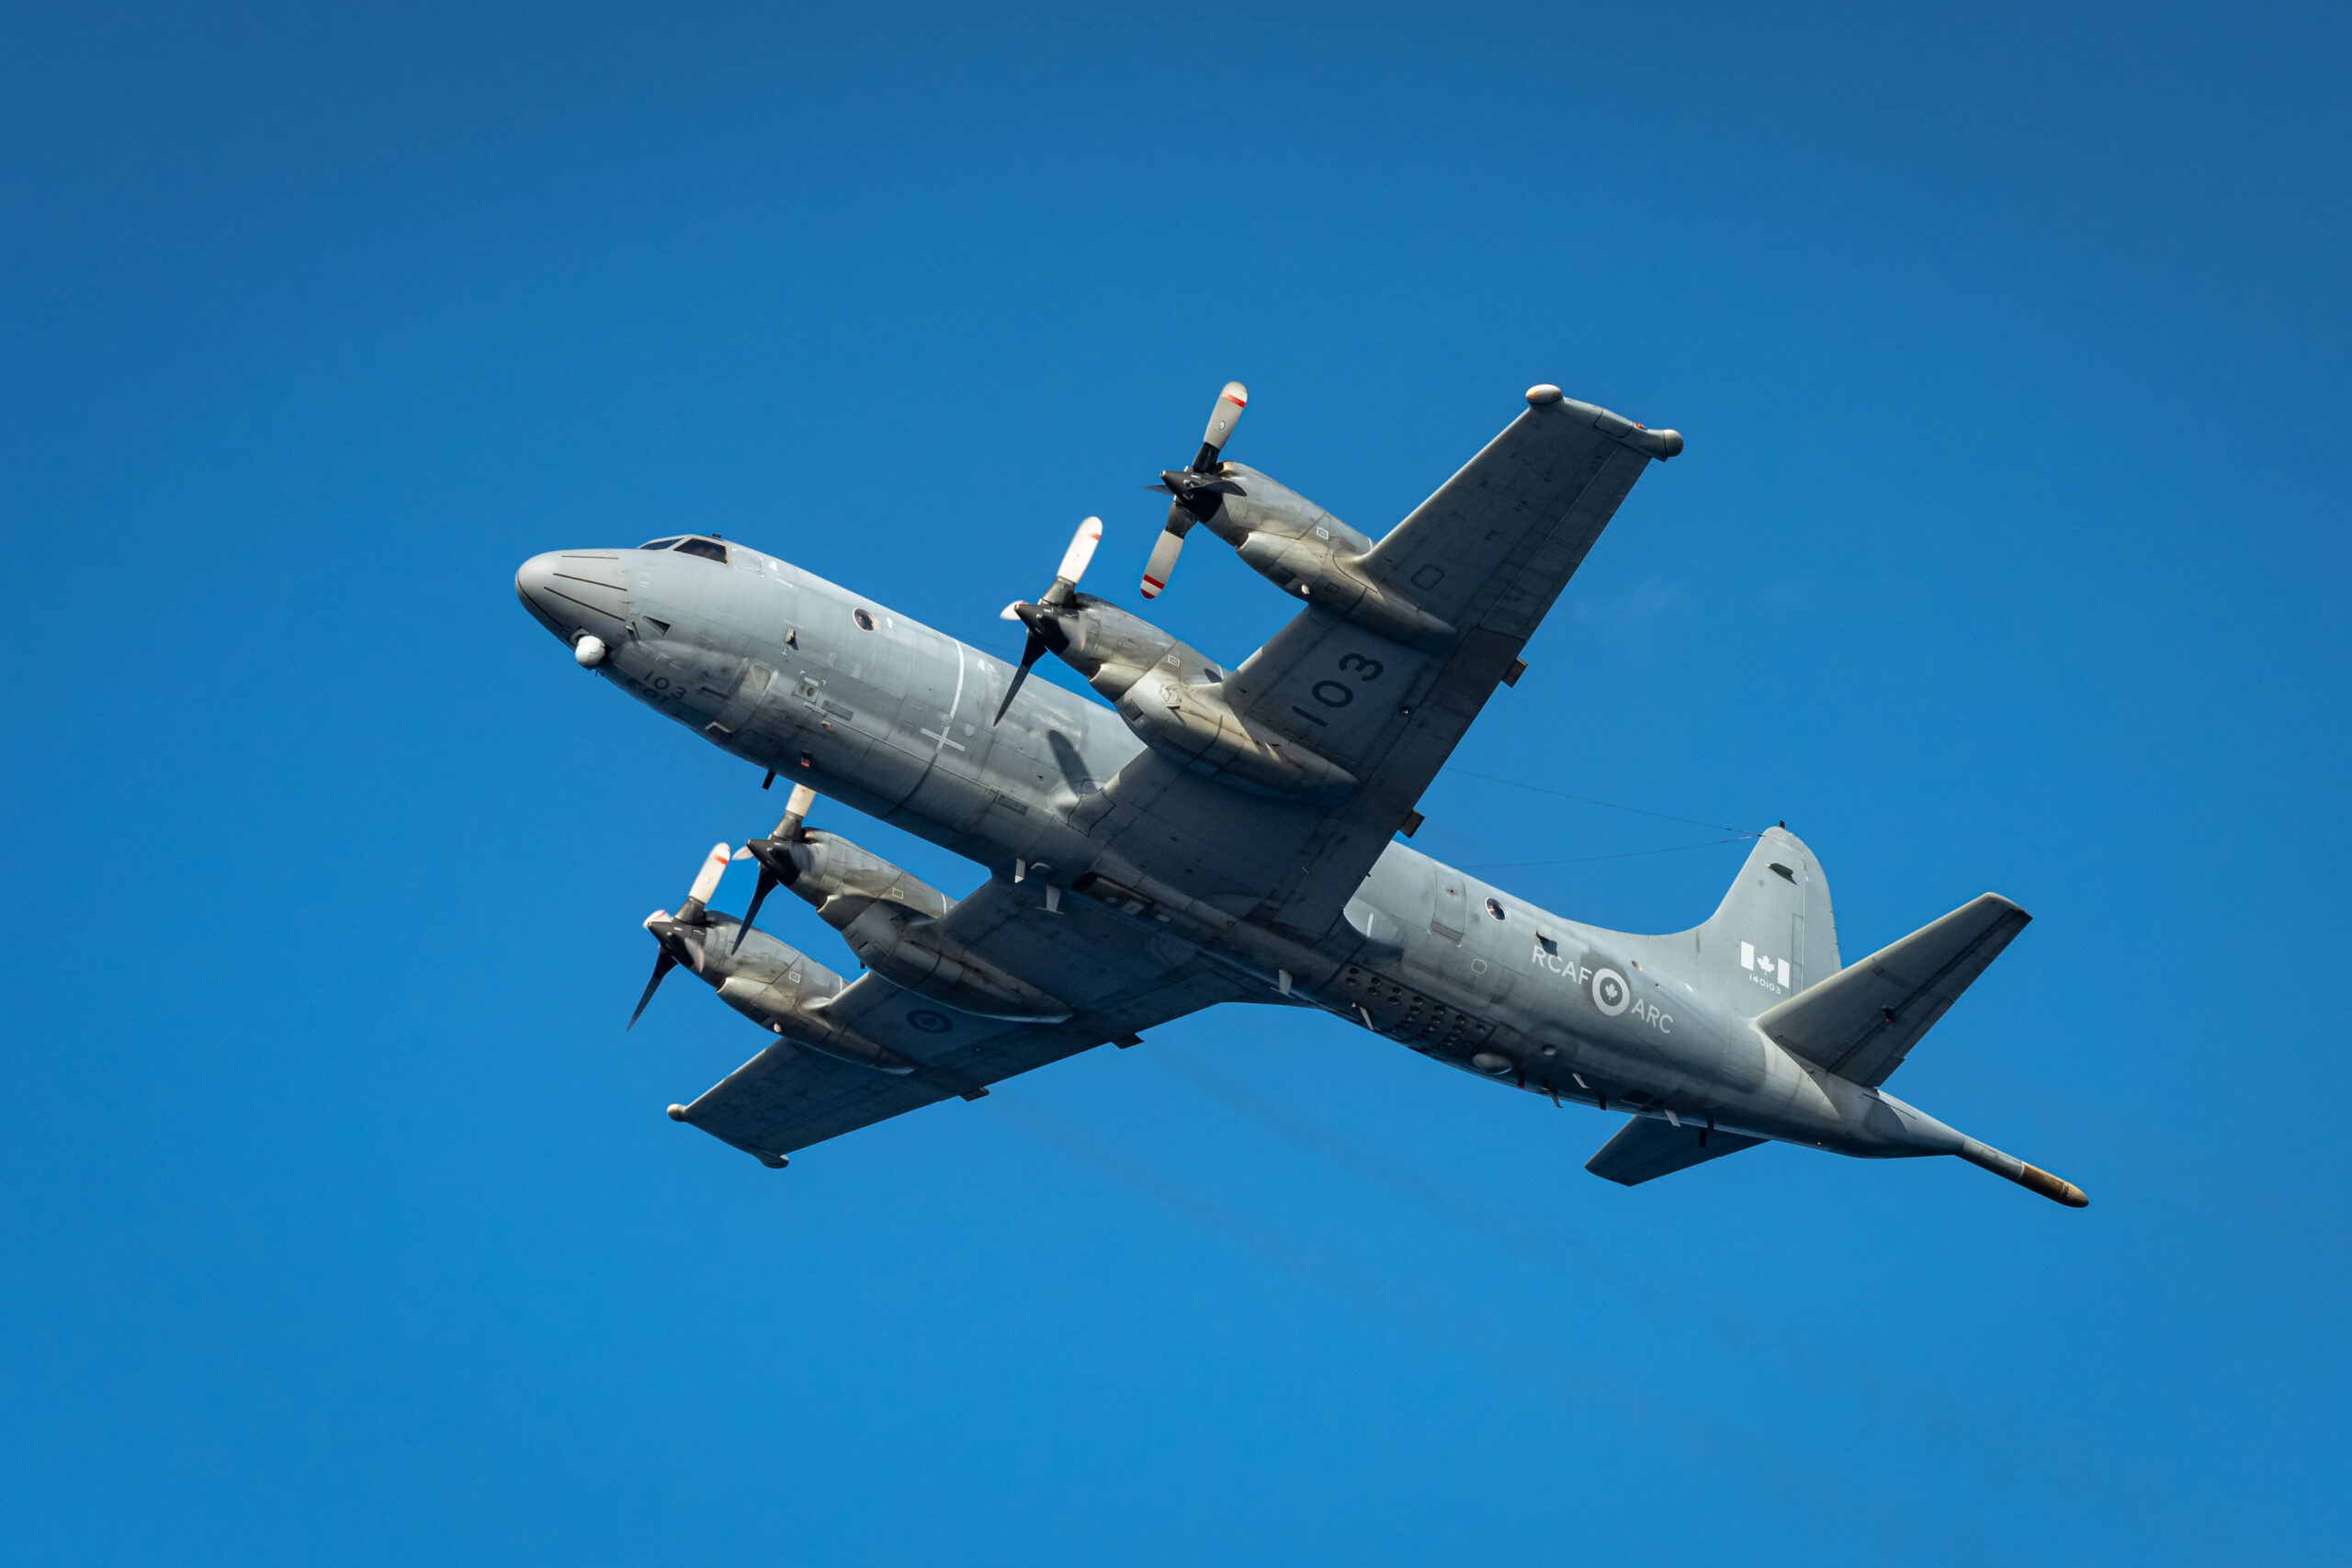 Canadian Cp 140 Long Range Patrol Aircraft Deployed To Support Haiti